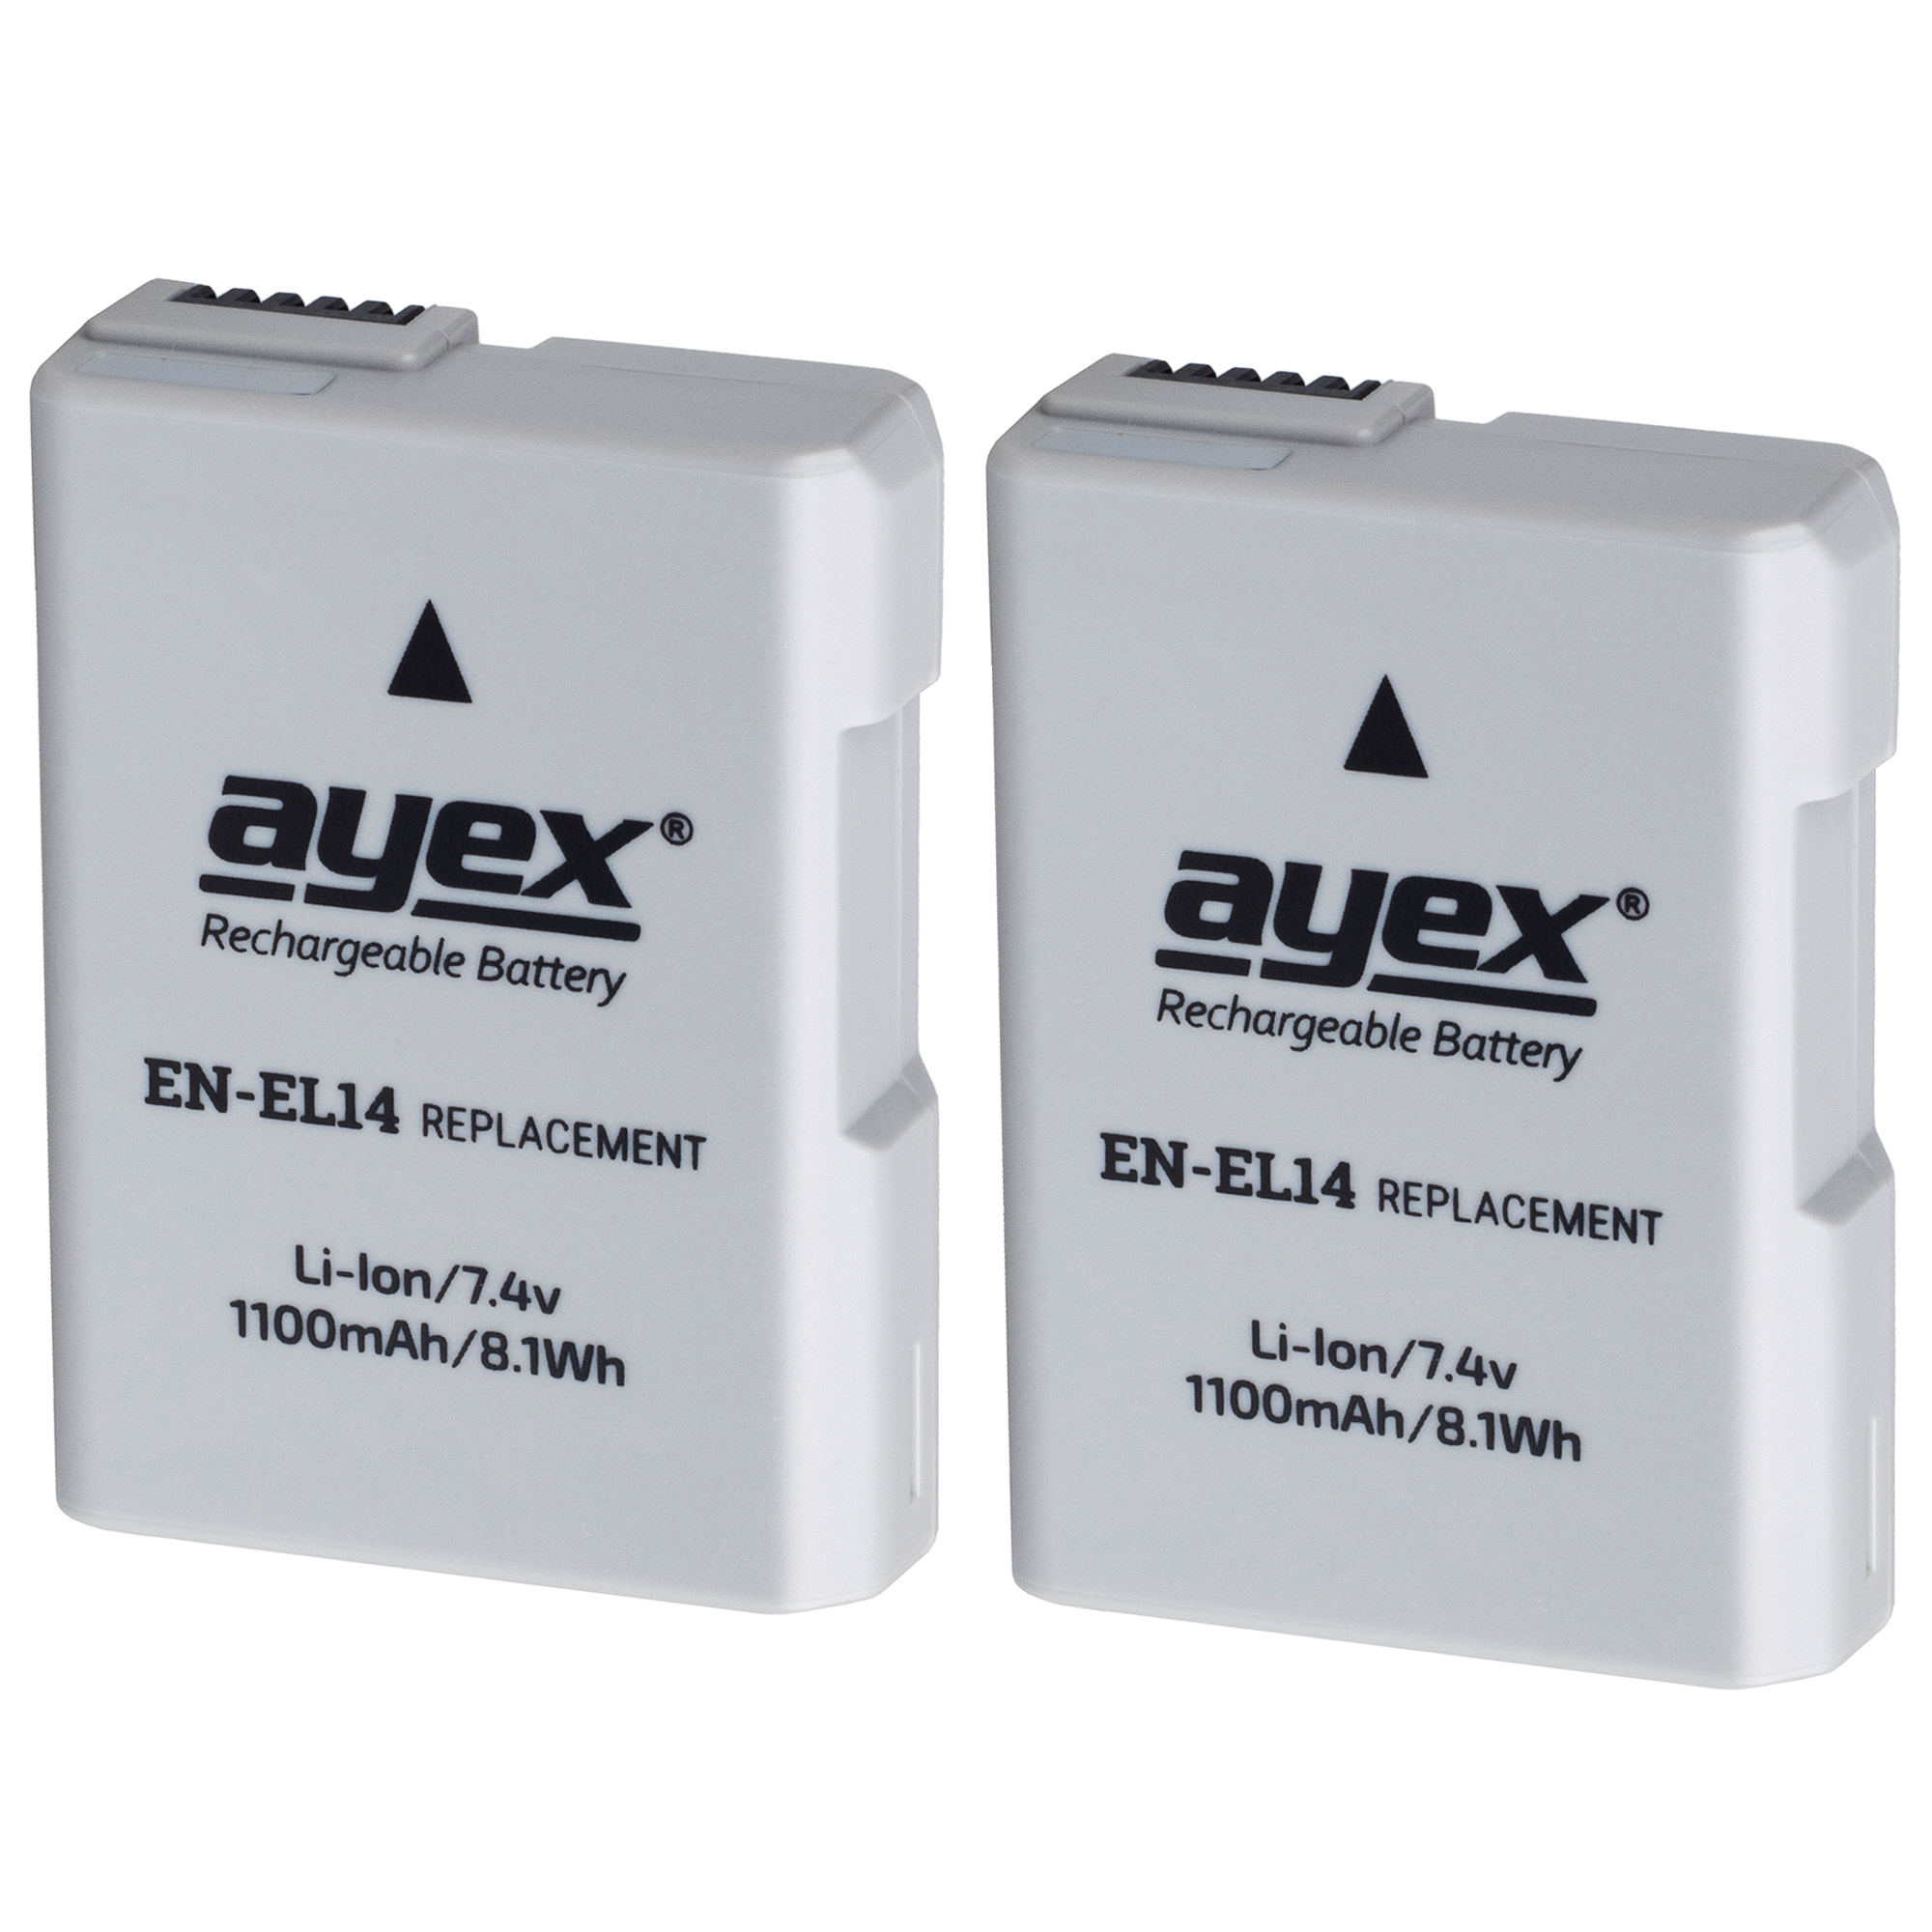 D5100 1x USB Batteriegriff-Set, AYEX + IR-Fernauslöser D5200 + für Nikon + EN-EL14 Dual 2x Akku Ladegerät, Black Akkugriff